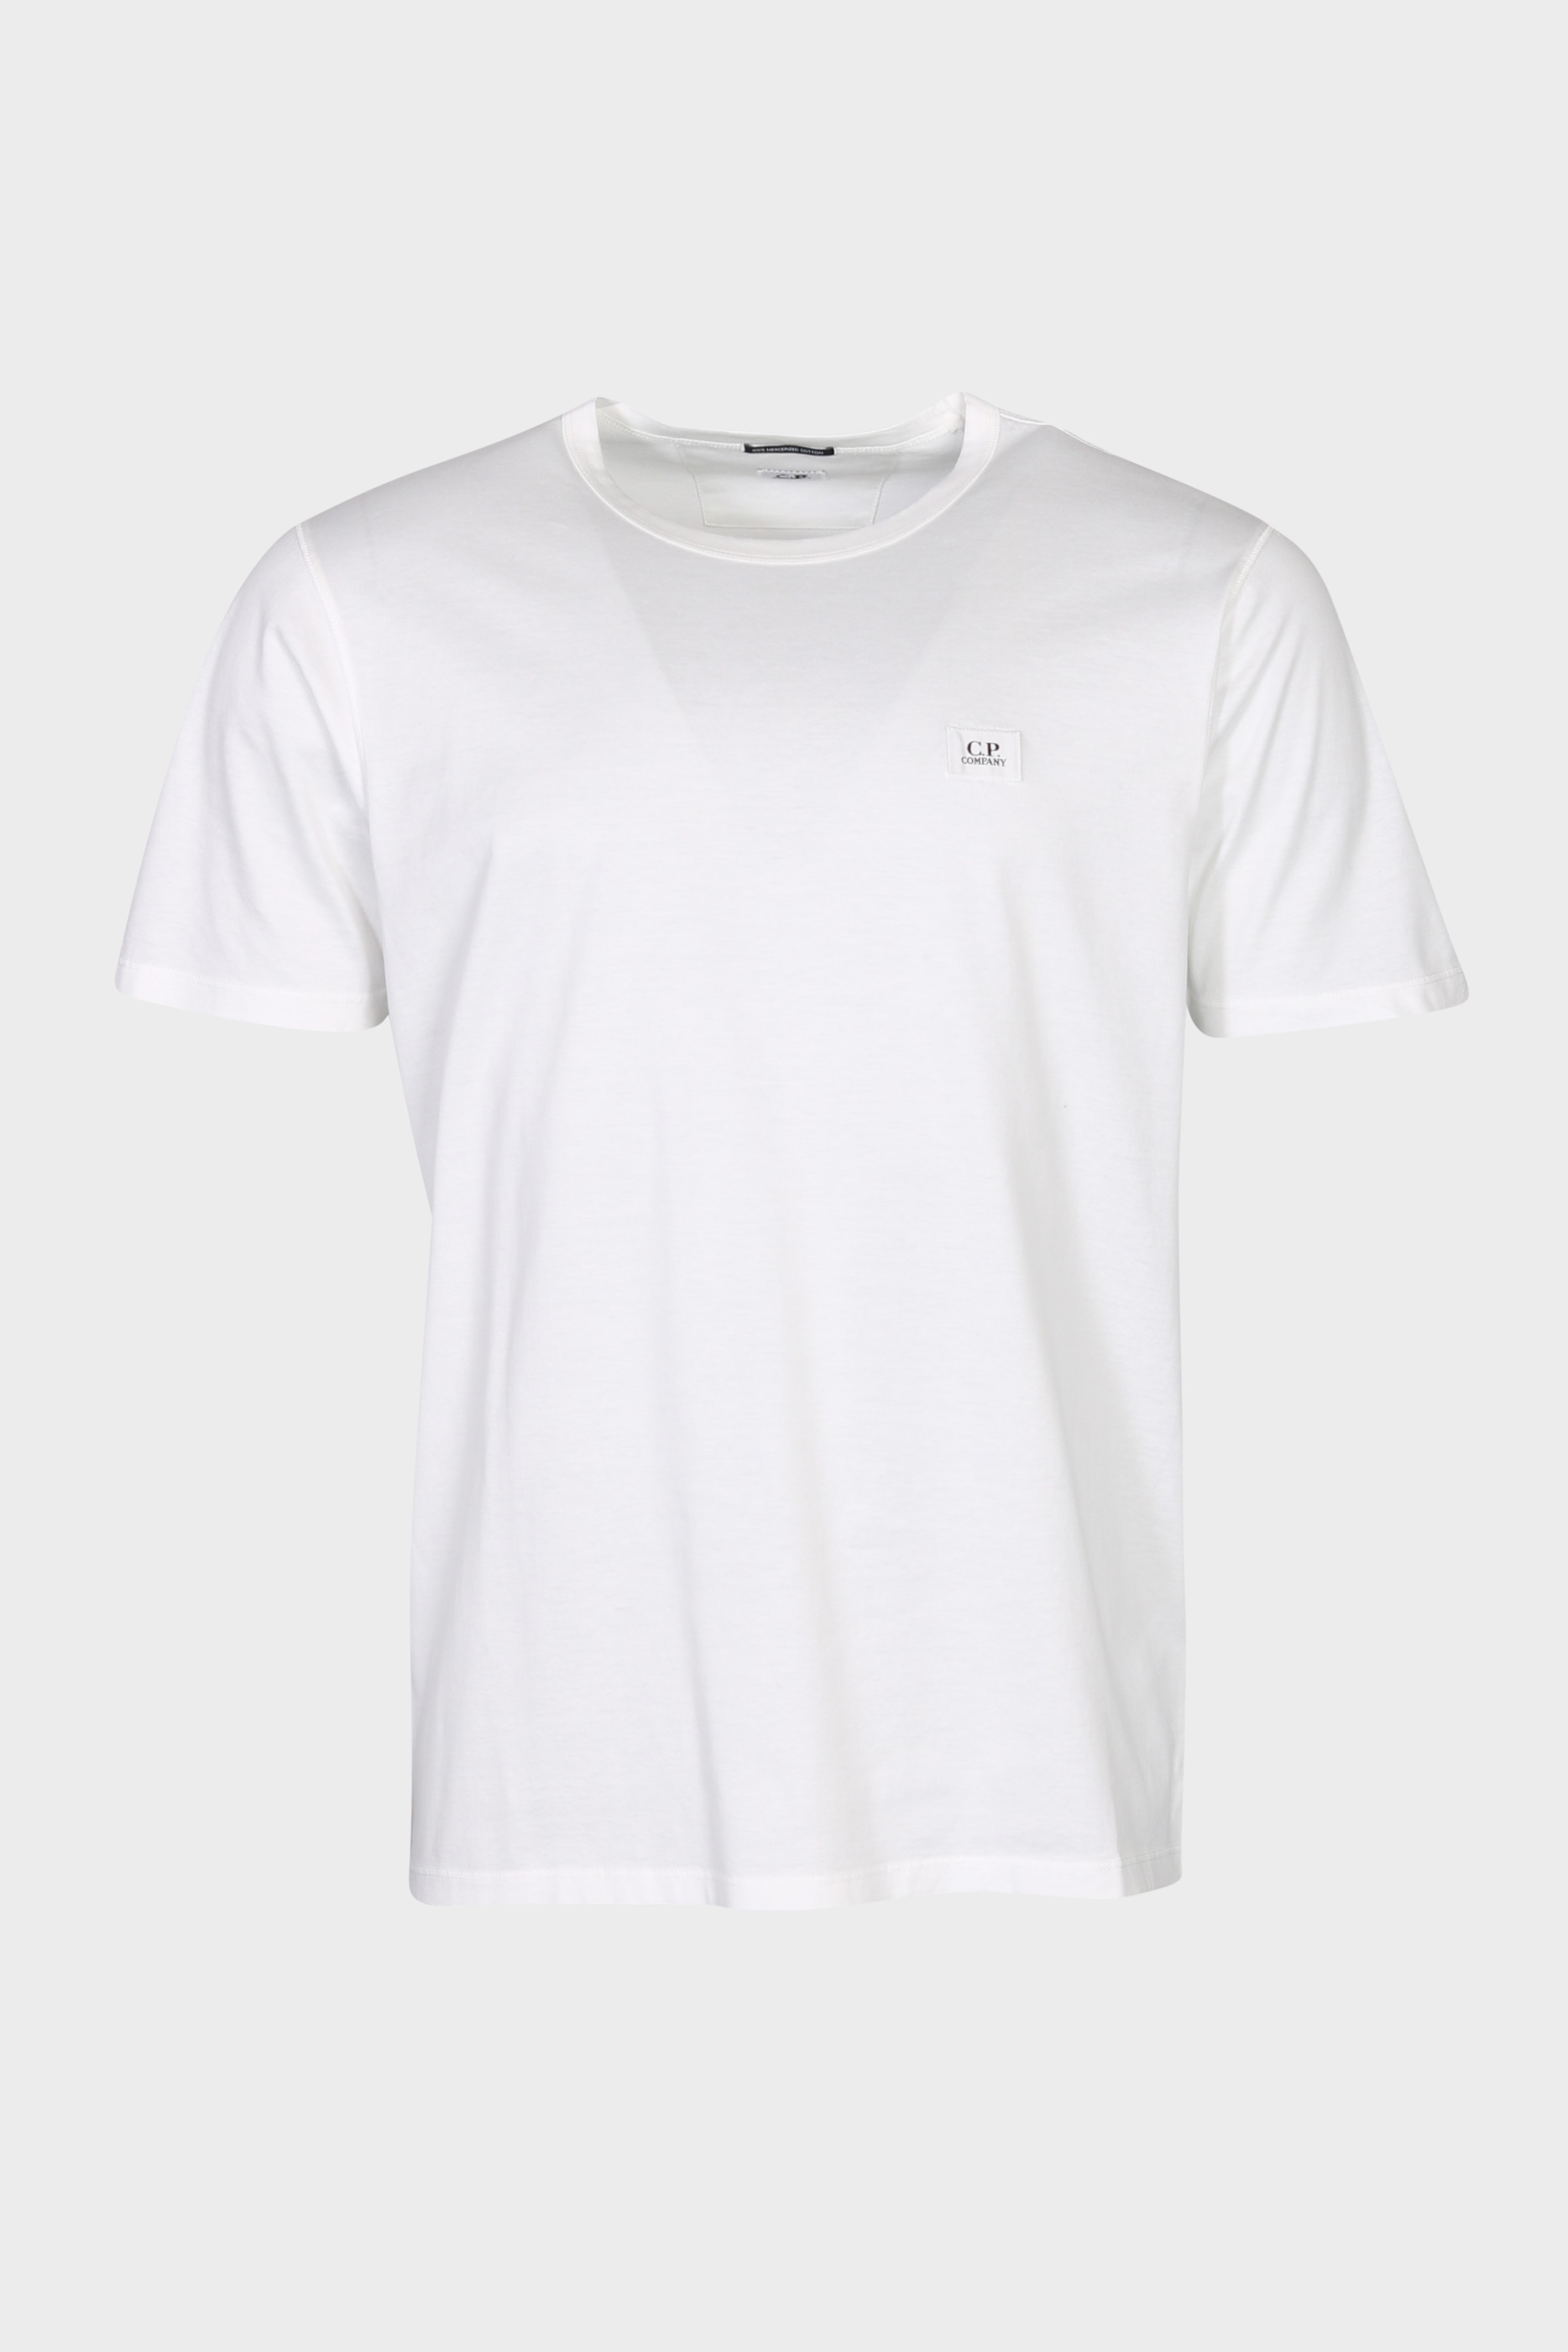 C.P. COMPANY T-Shirt in White XXL